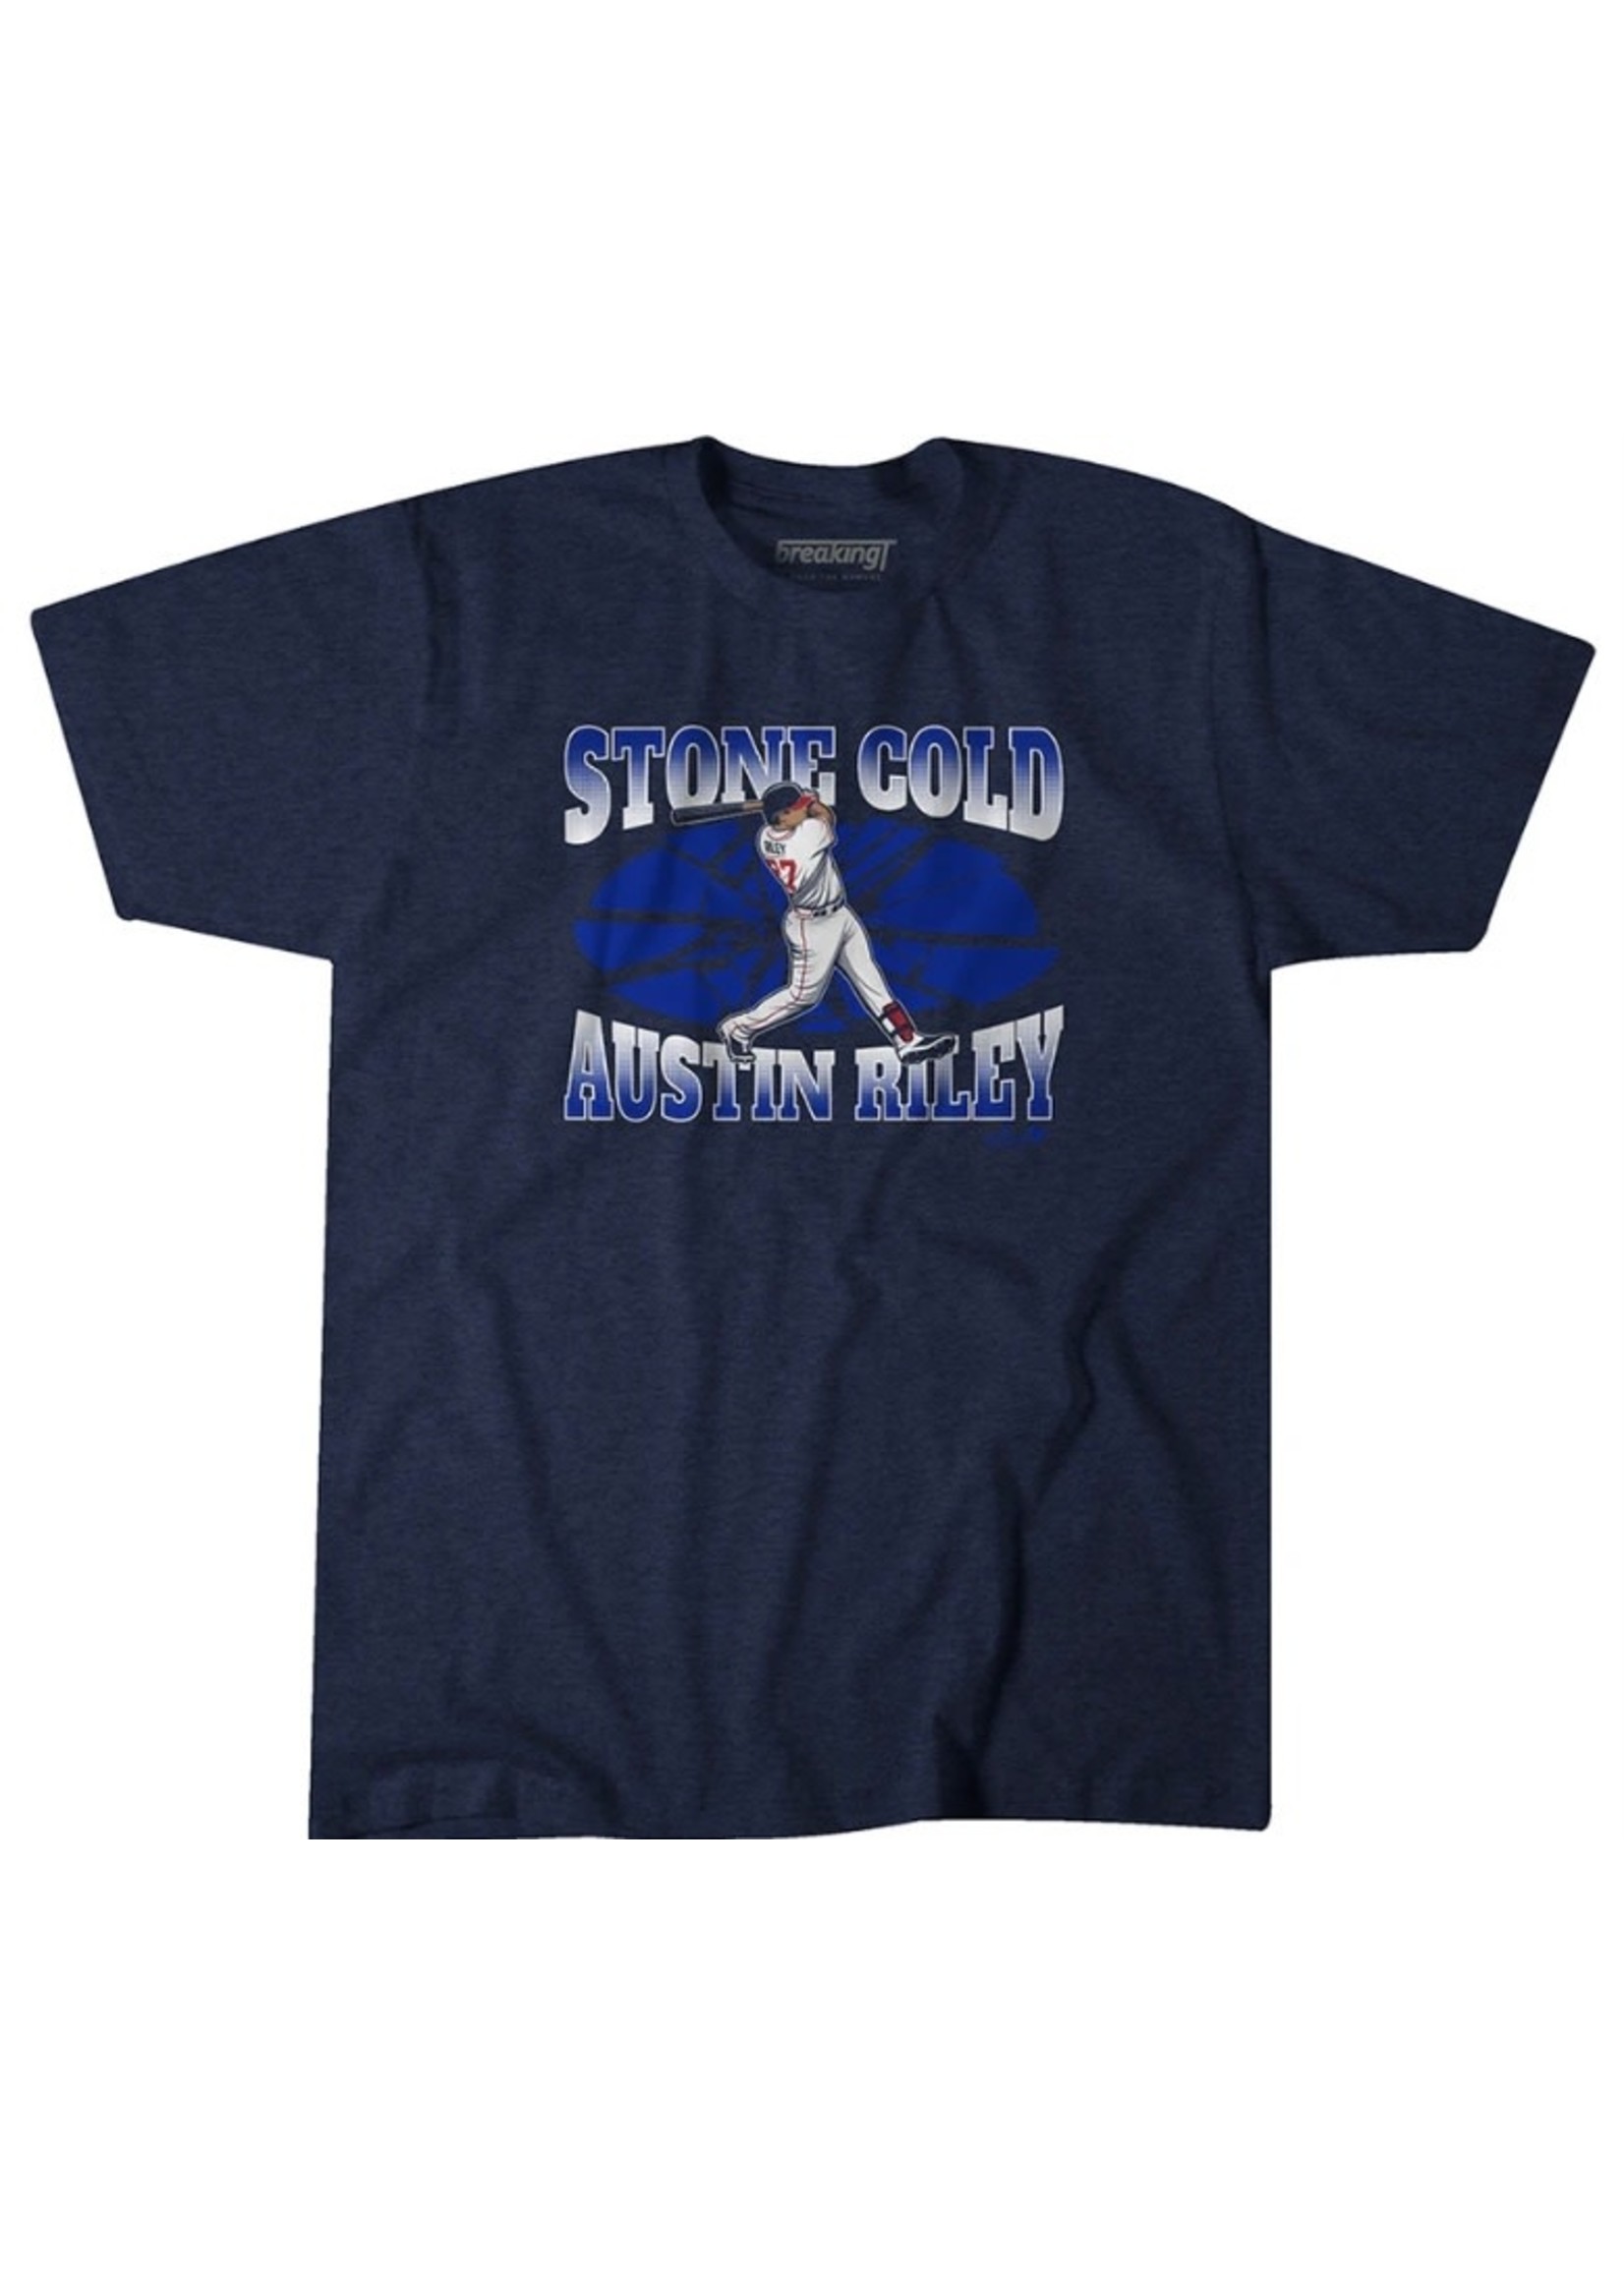 Stone Cold Austin Riley T-Shirt 2XL